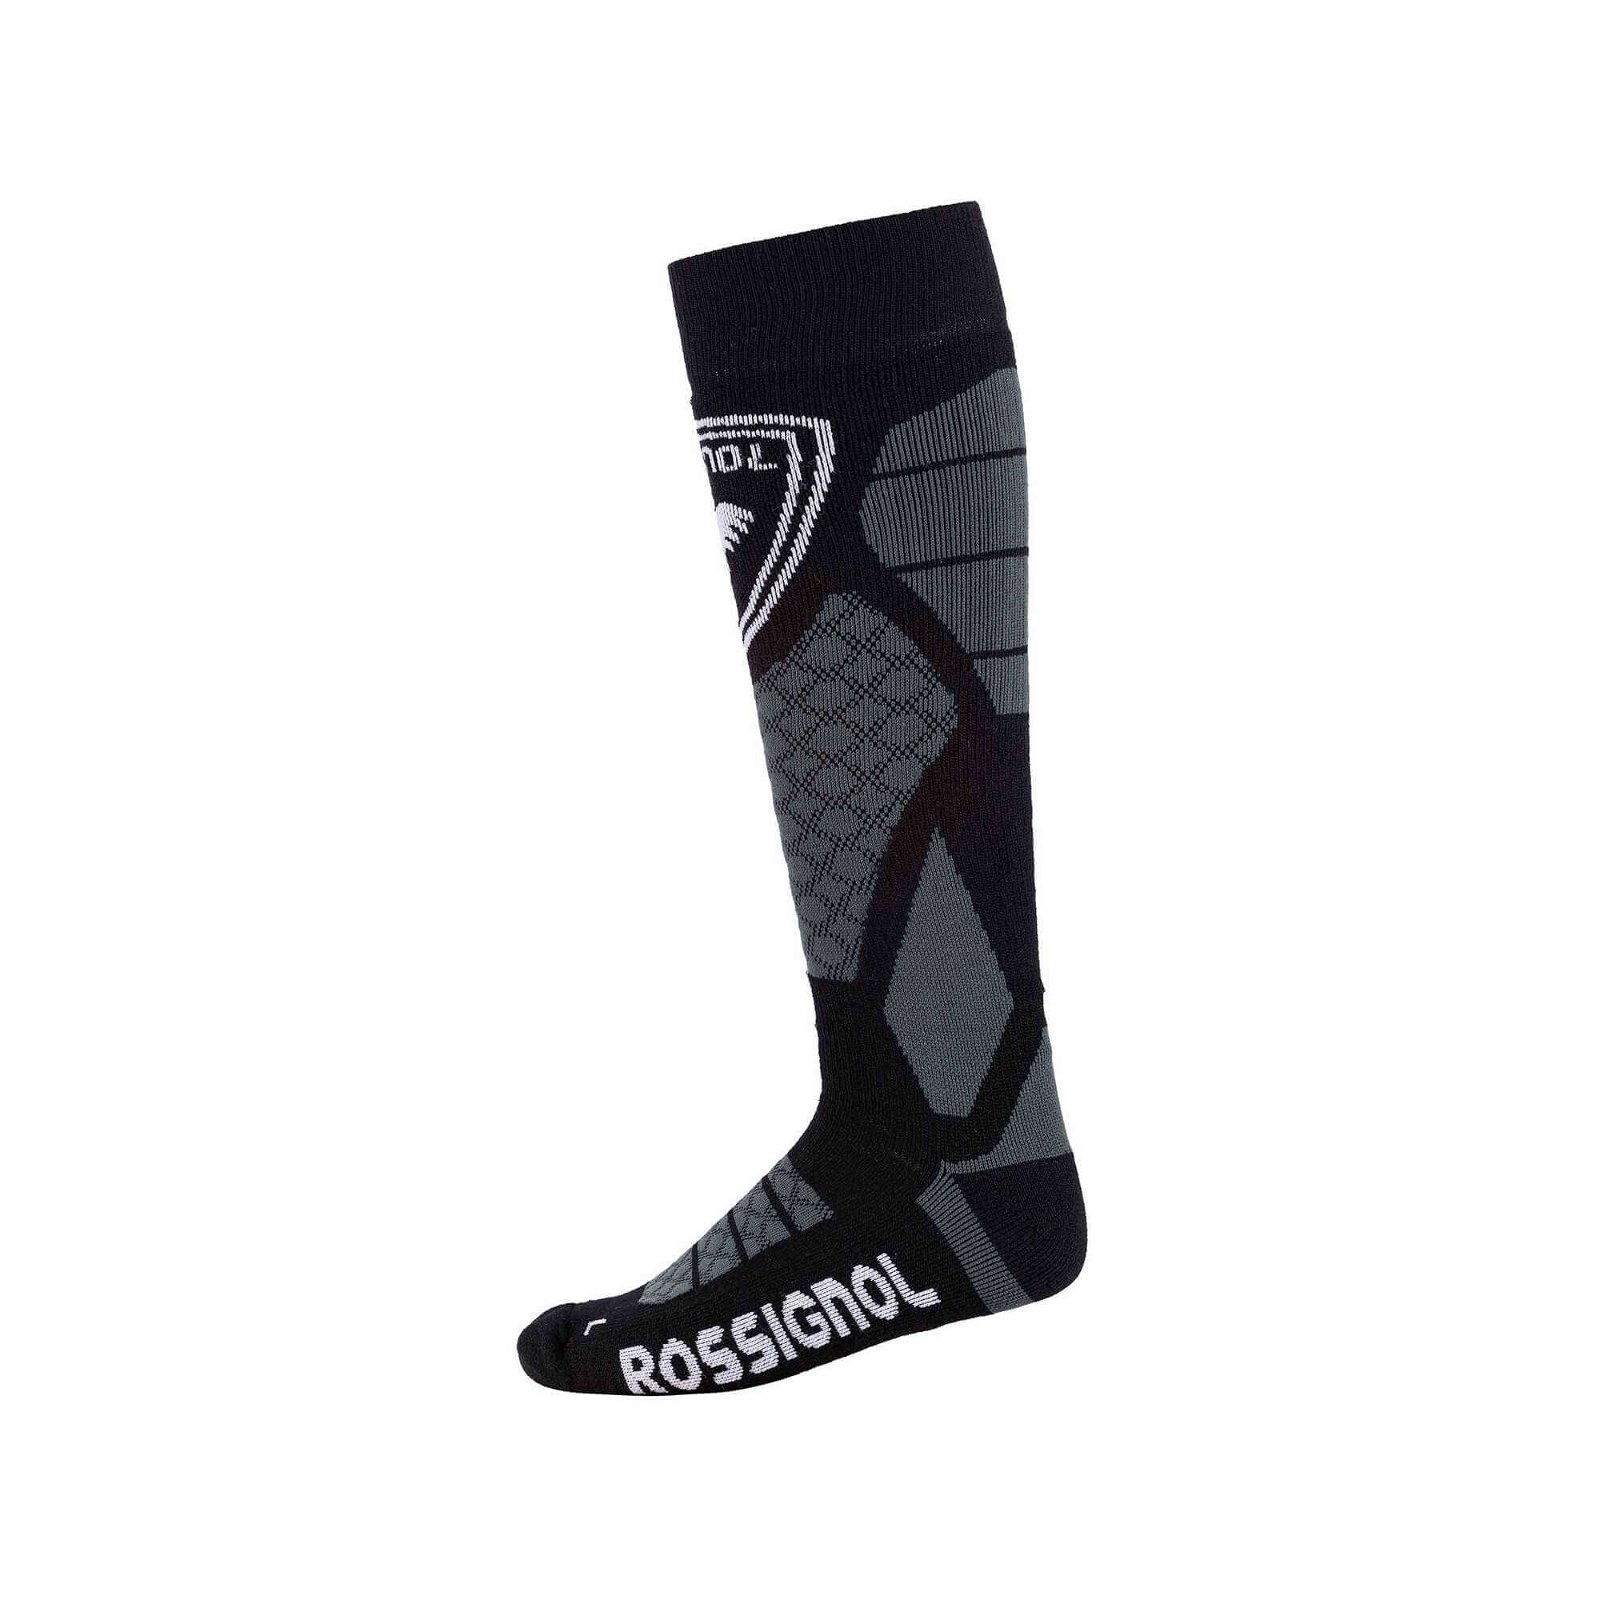 Rossignol L3 Wool&Silk Kayak/Snowboard Çorabı - Siyah - 1